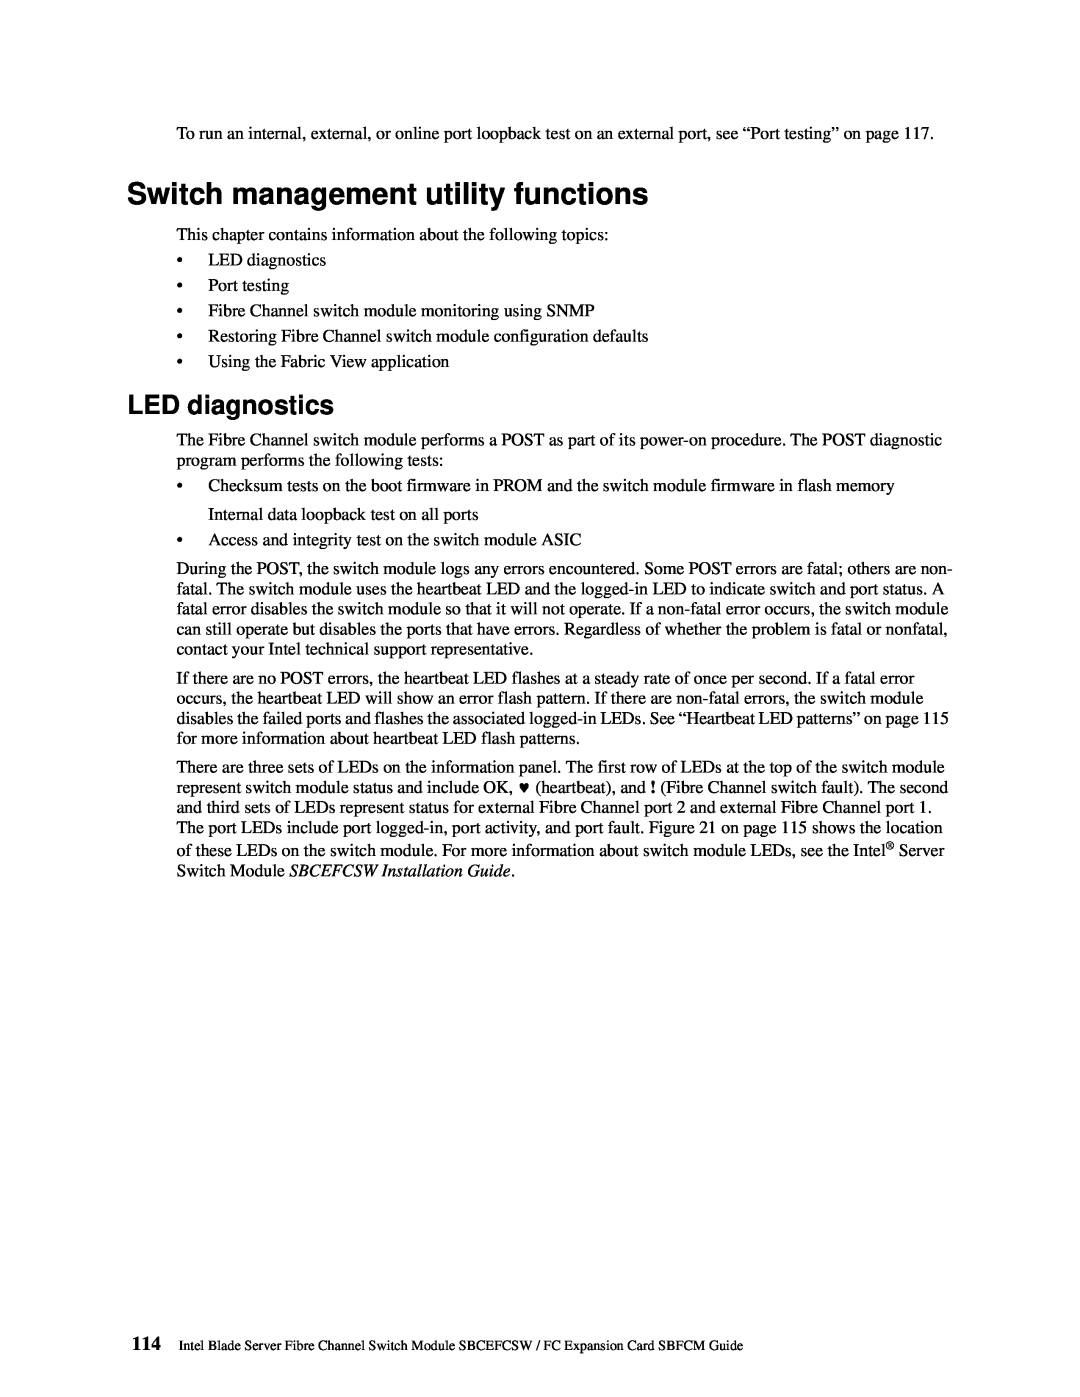 Intel SBFCM, SBCEFCSW manual Switch management utility functions, LED diagnostics 